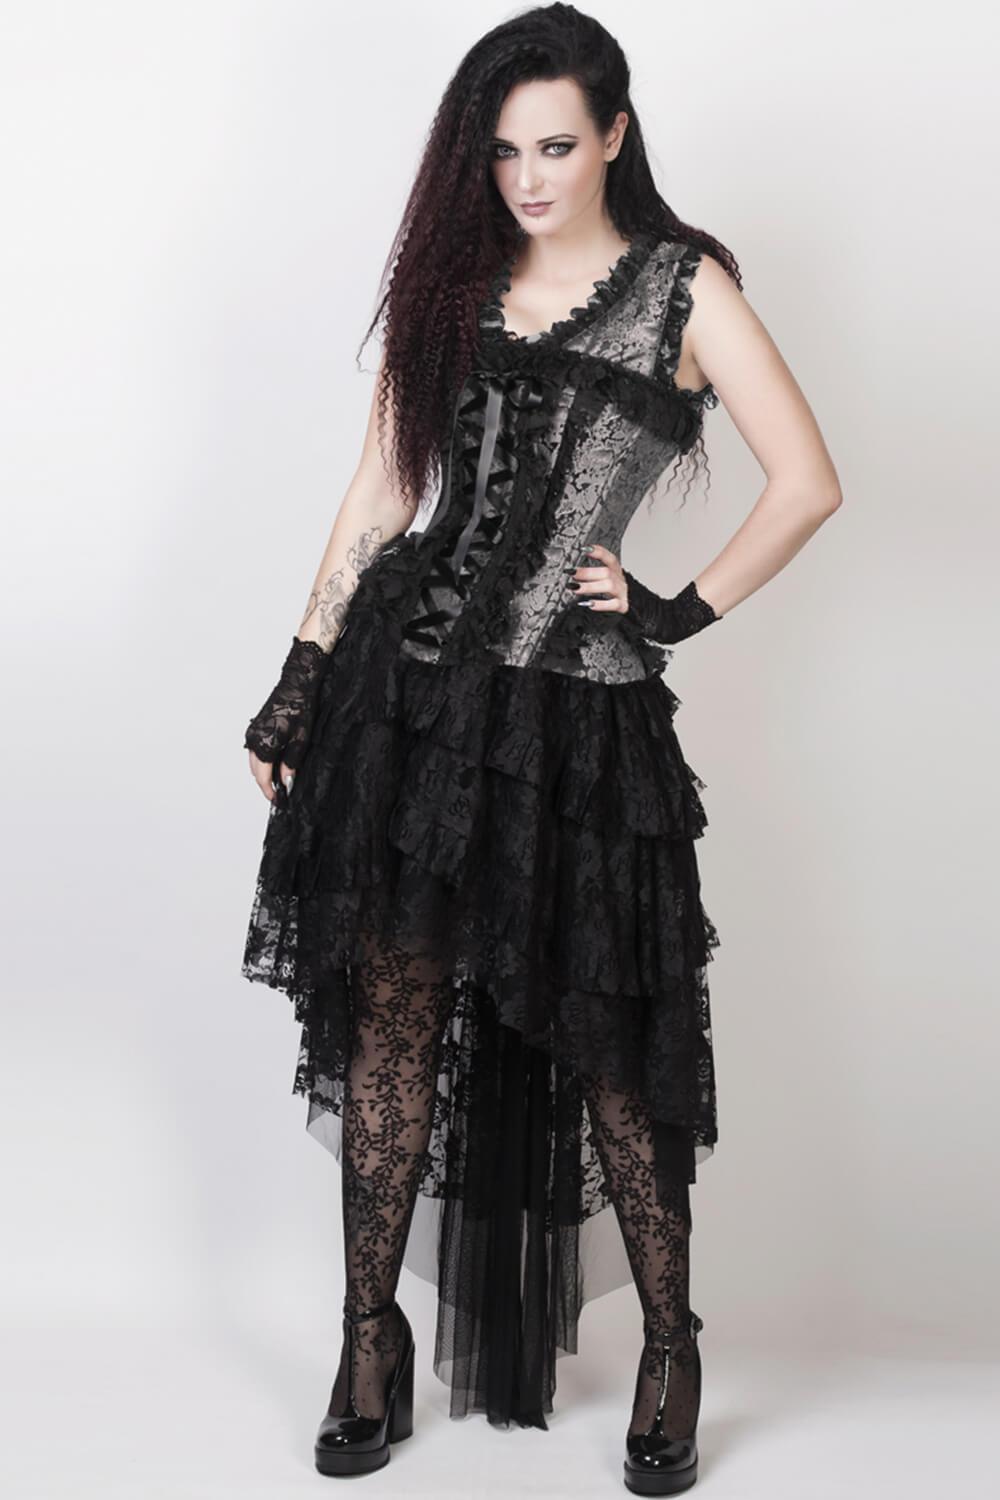 Corset Dress Victorian Burlesque